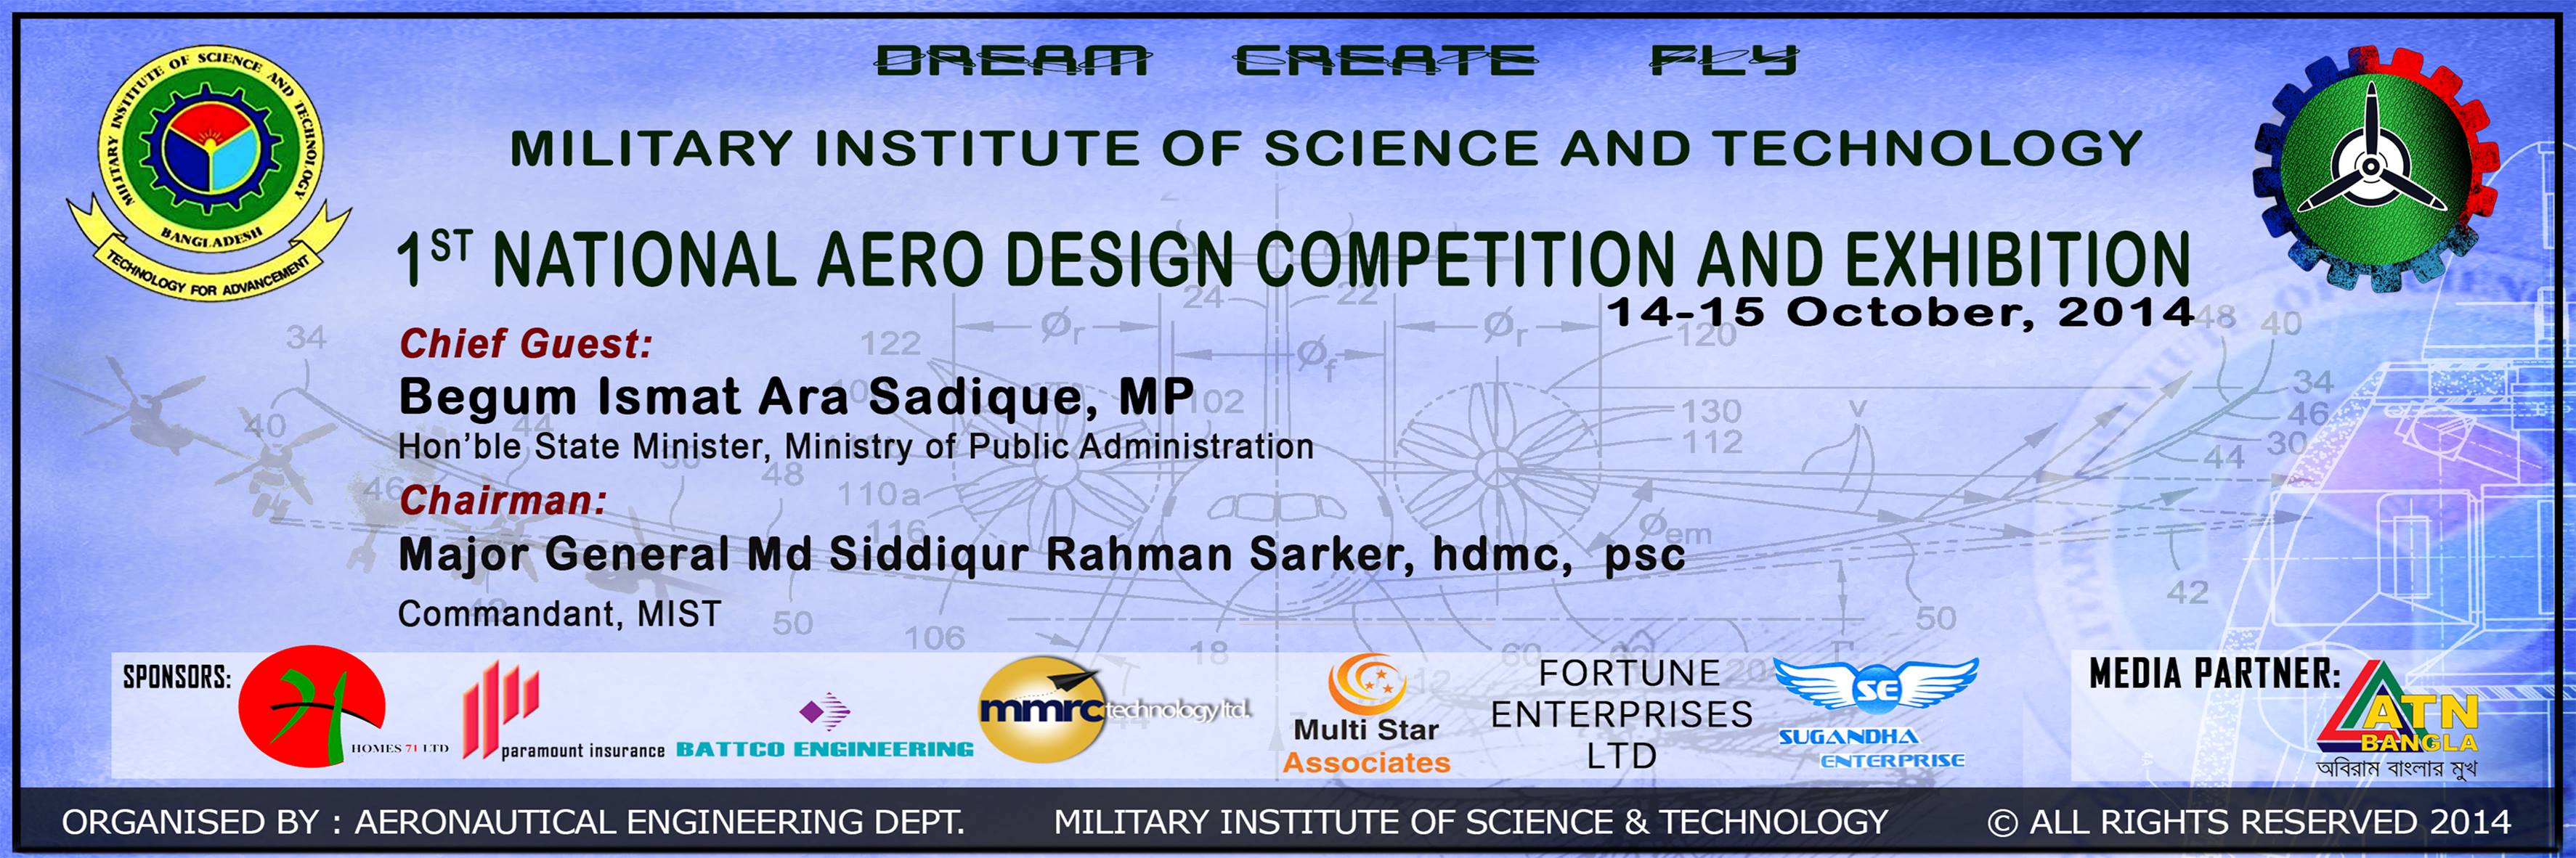 National Aero Design Competition & Exhibition